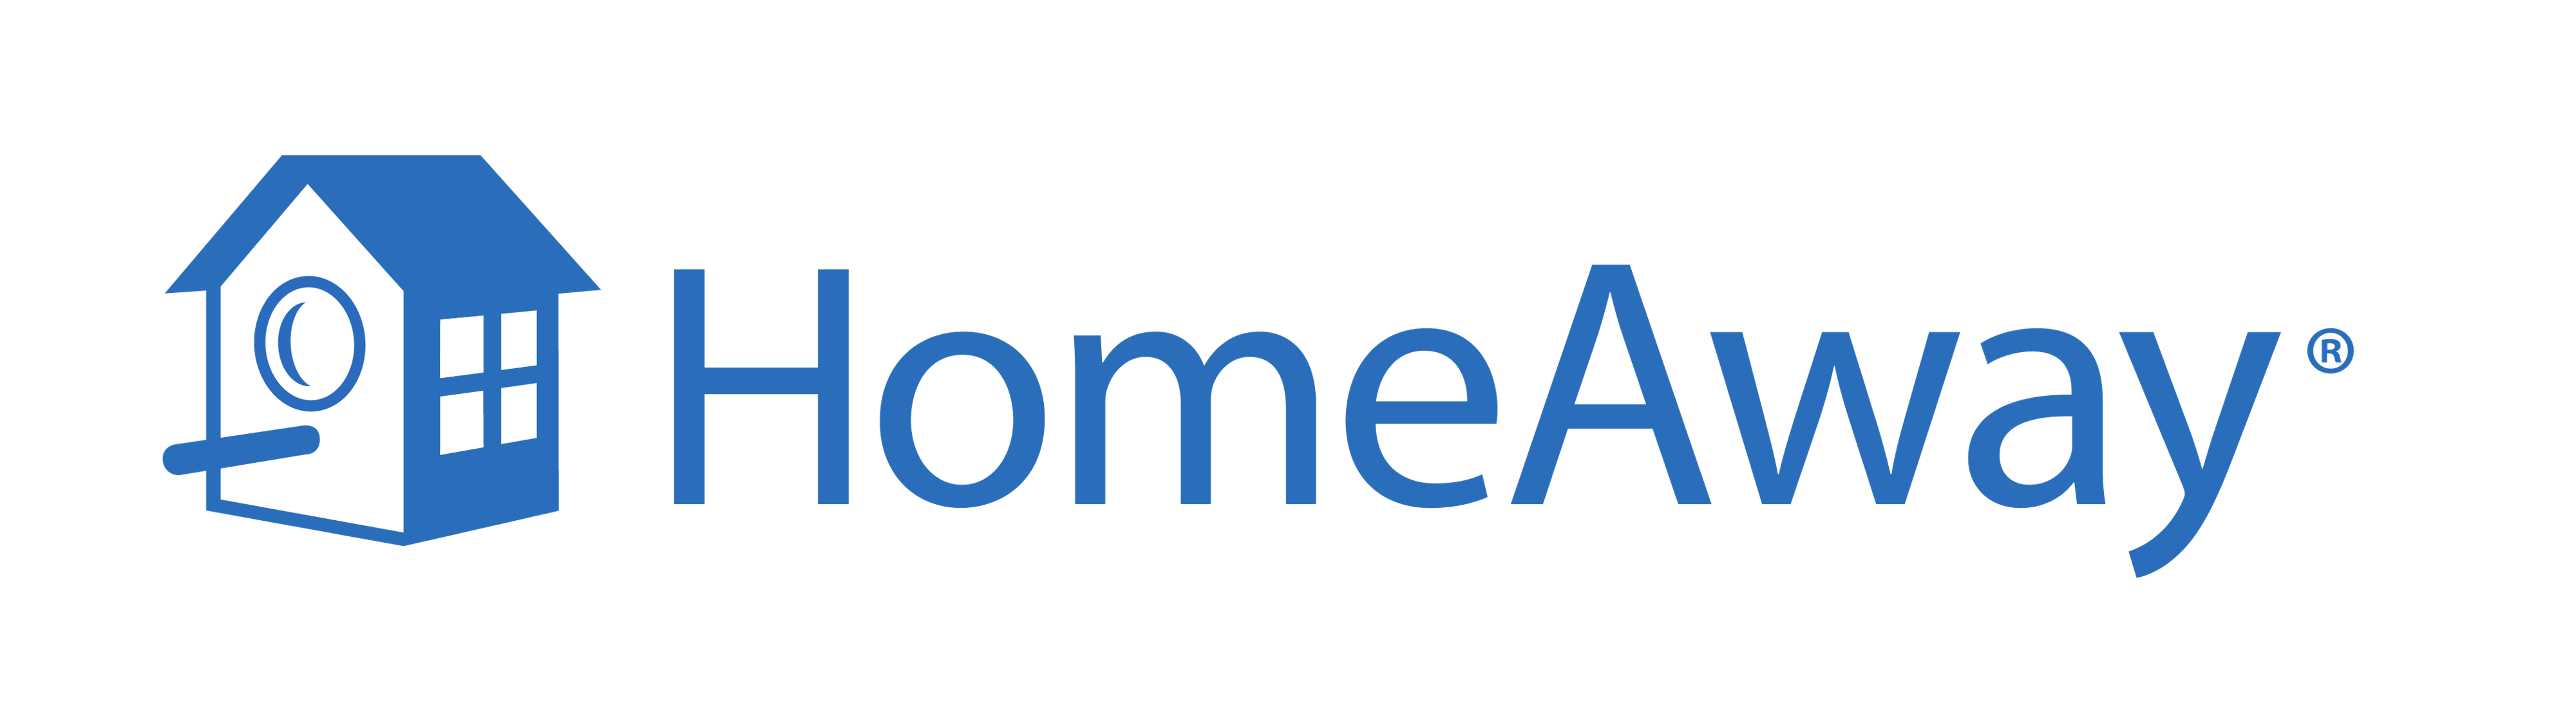 Homeaway logo